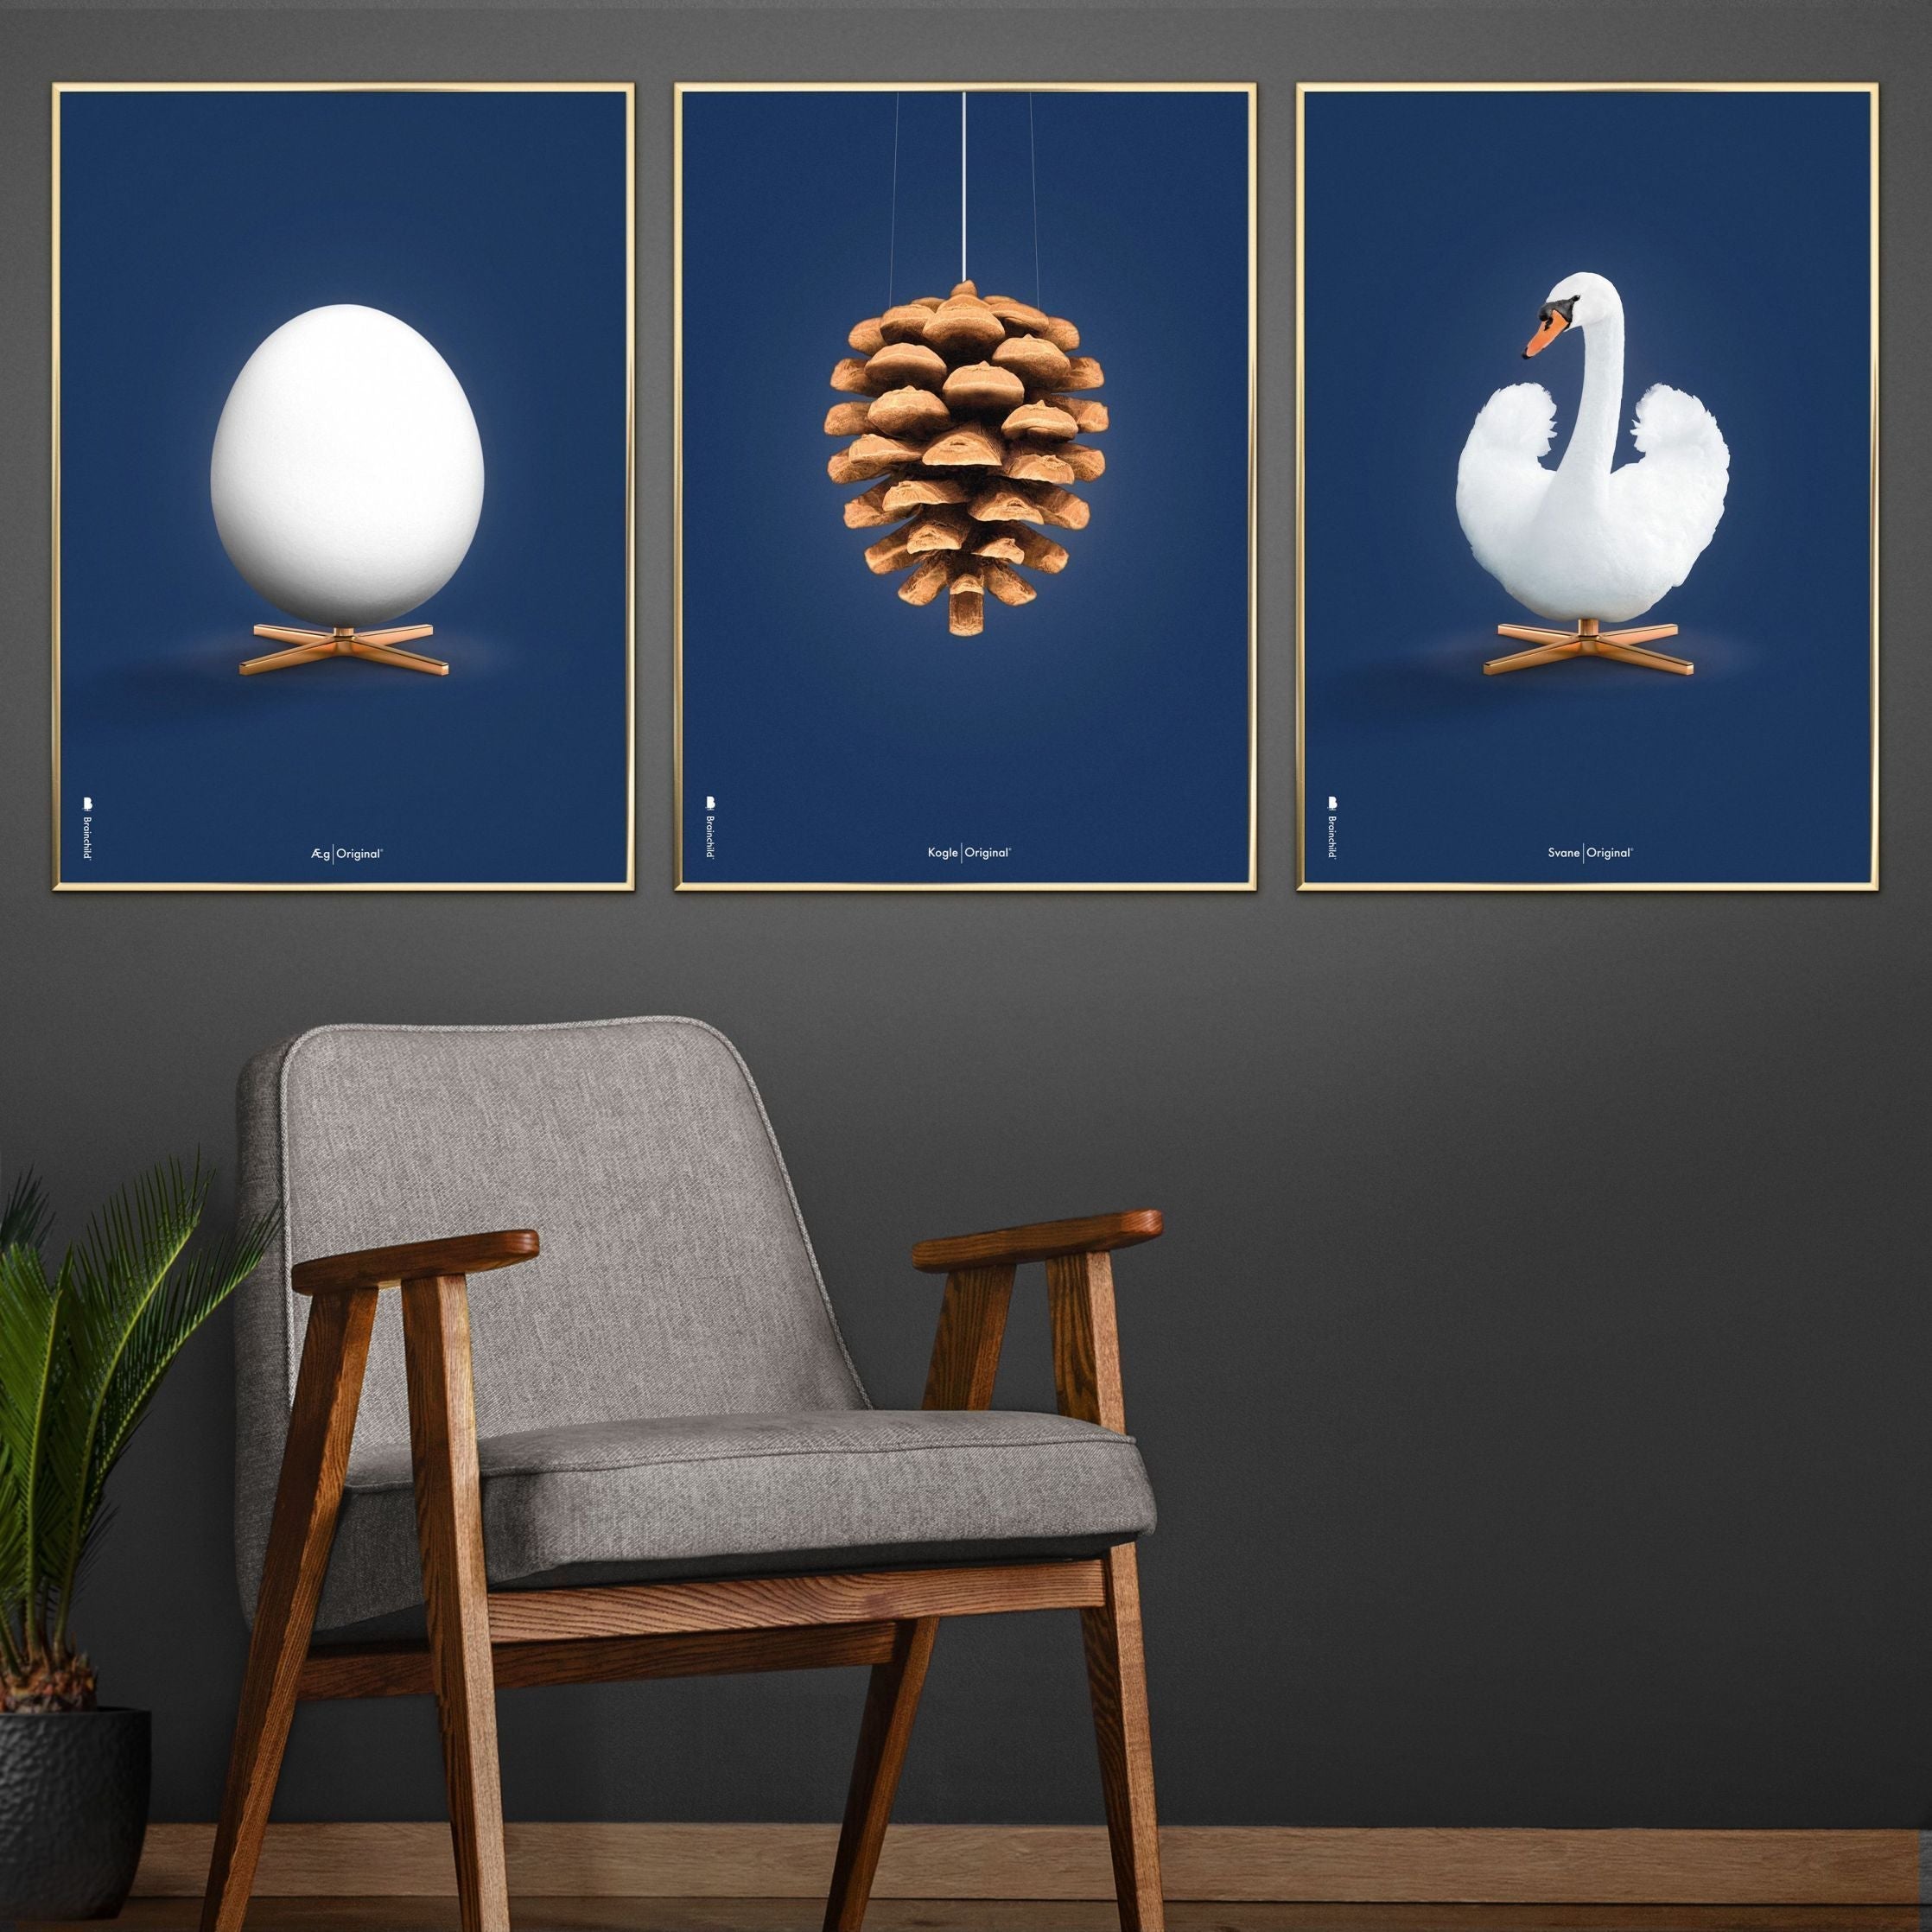 Brainchild Swan Classic Poster, Frame Made Of Light Wood 70 X100 Cm, Dark Blue Background